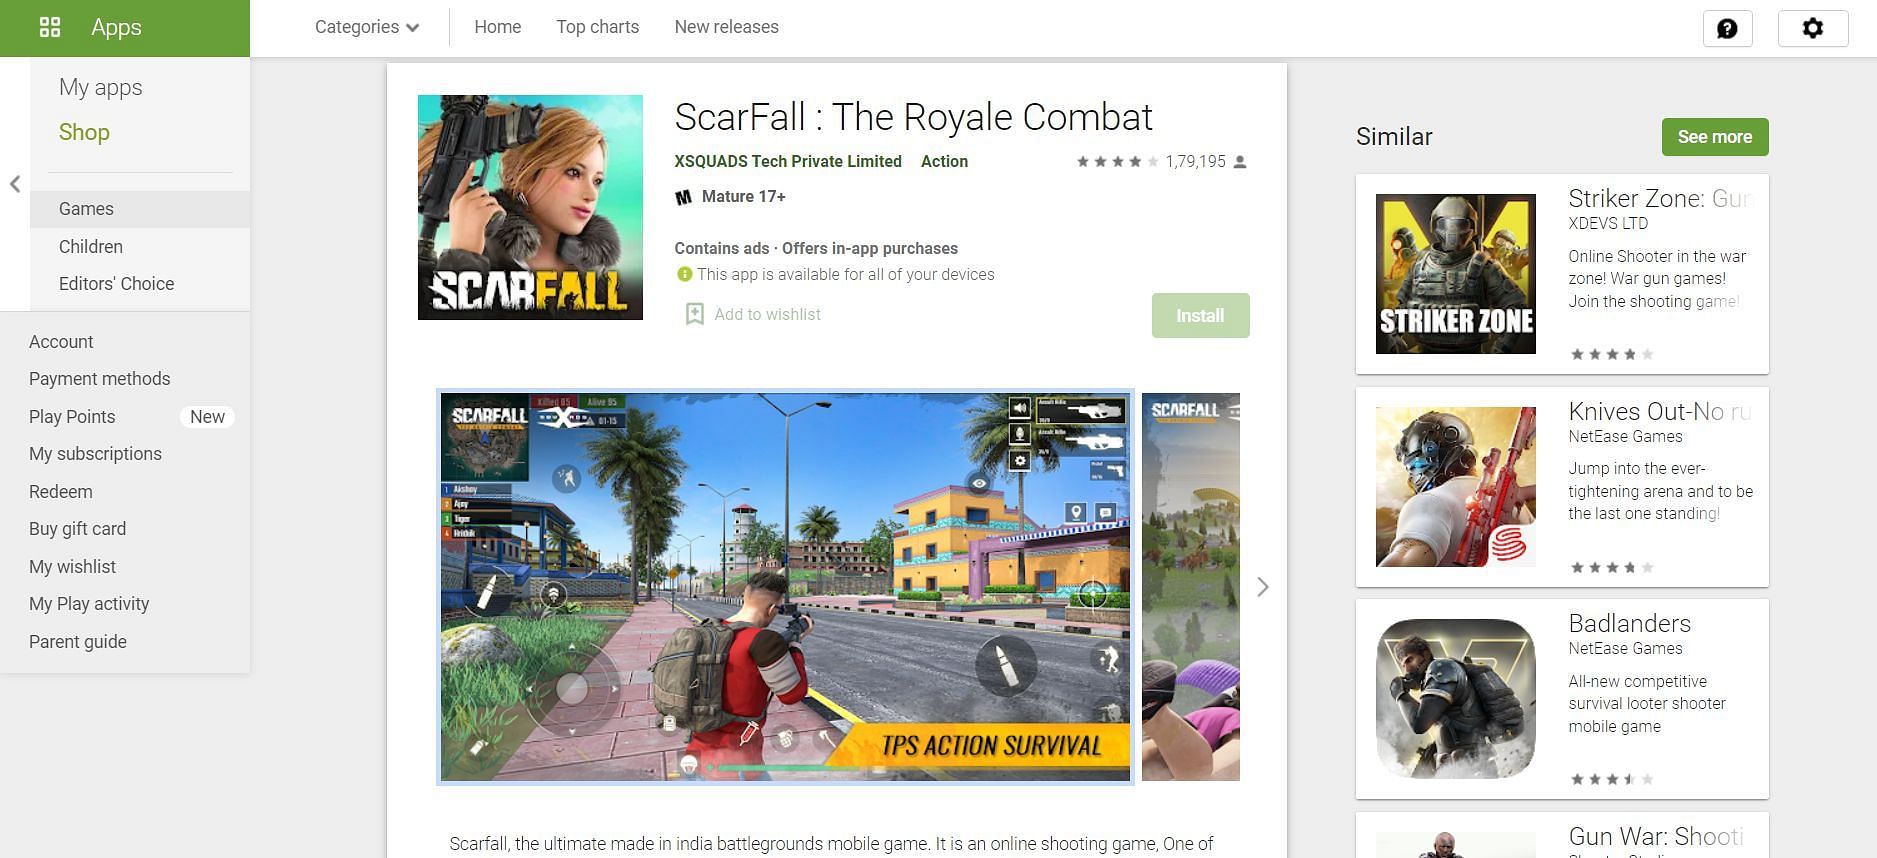 ScarFall - The Royale Combat (Image via Google Play)